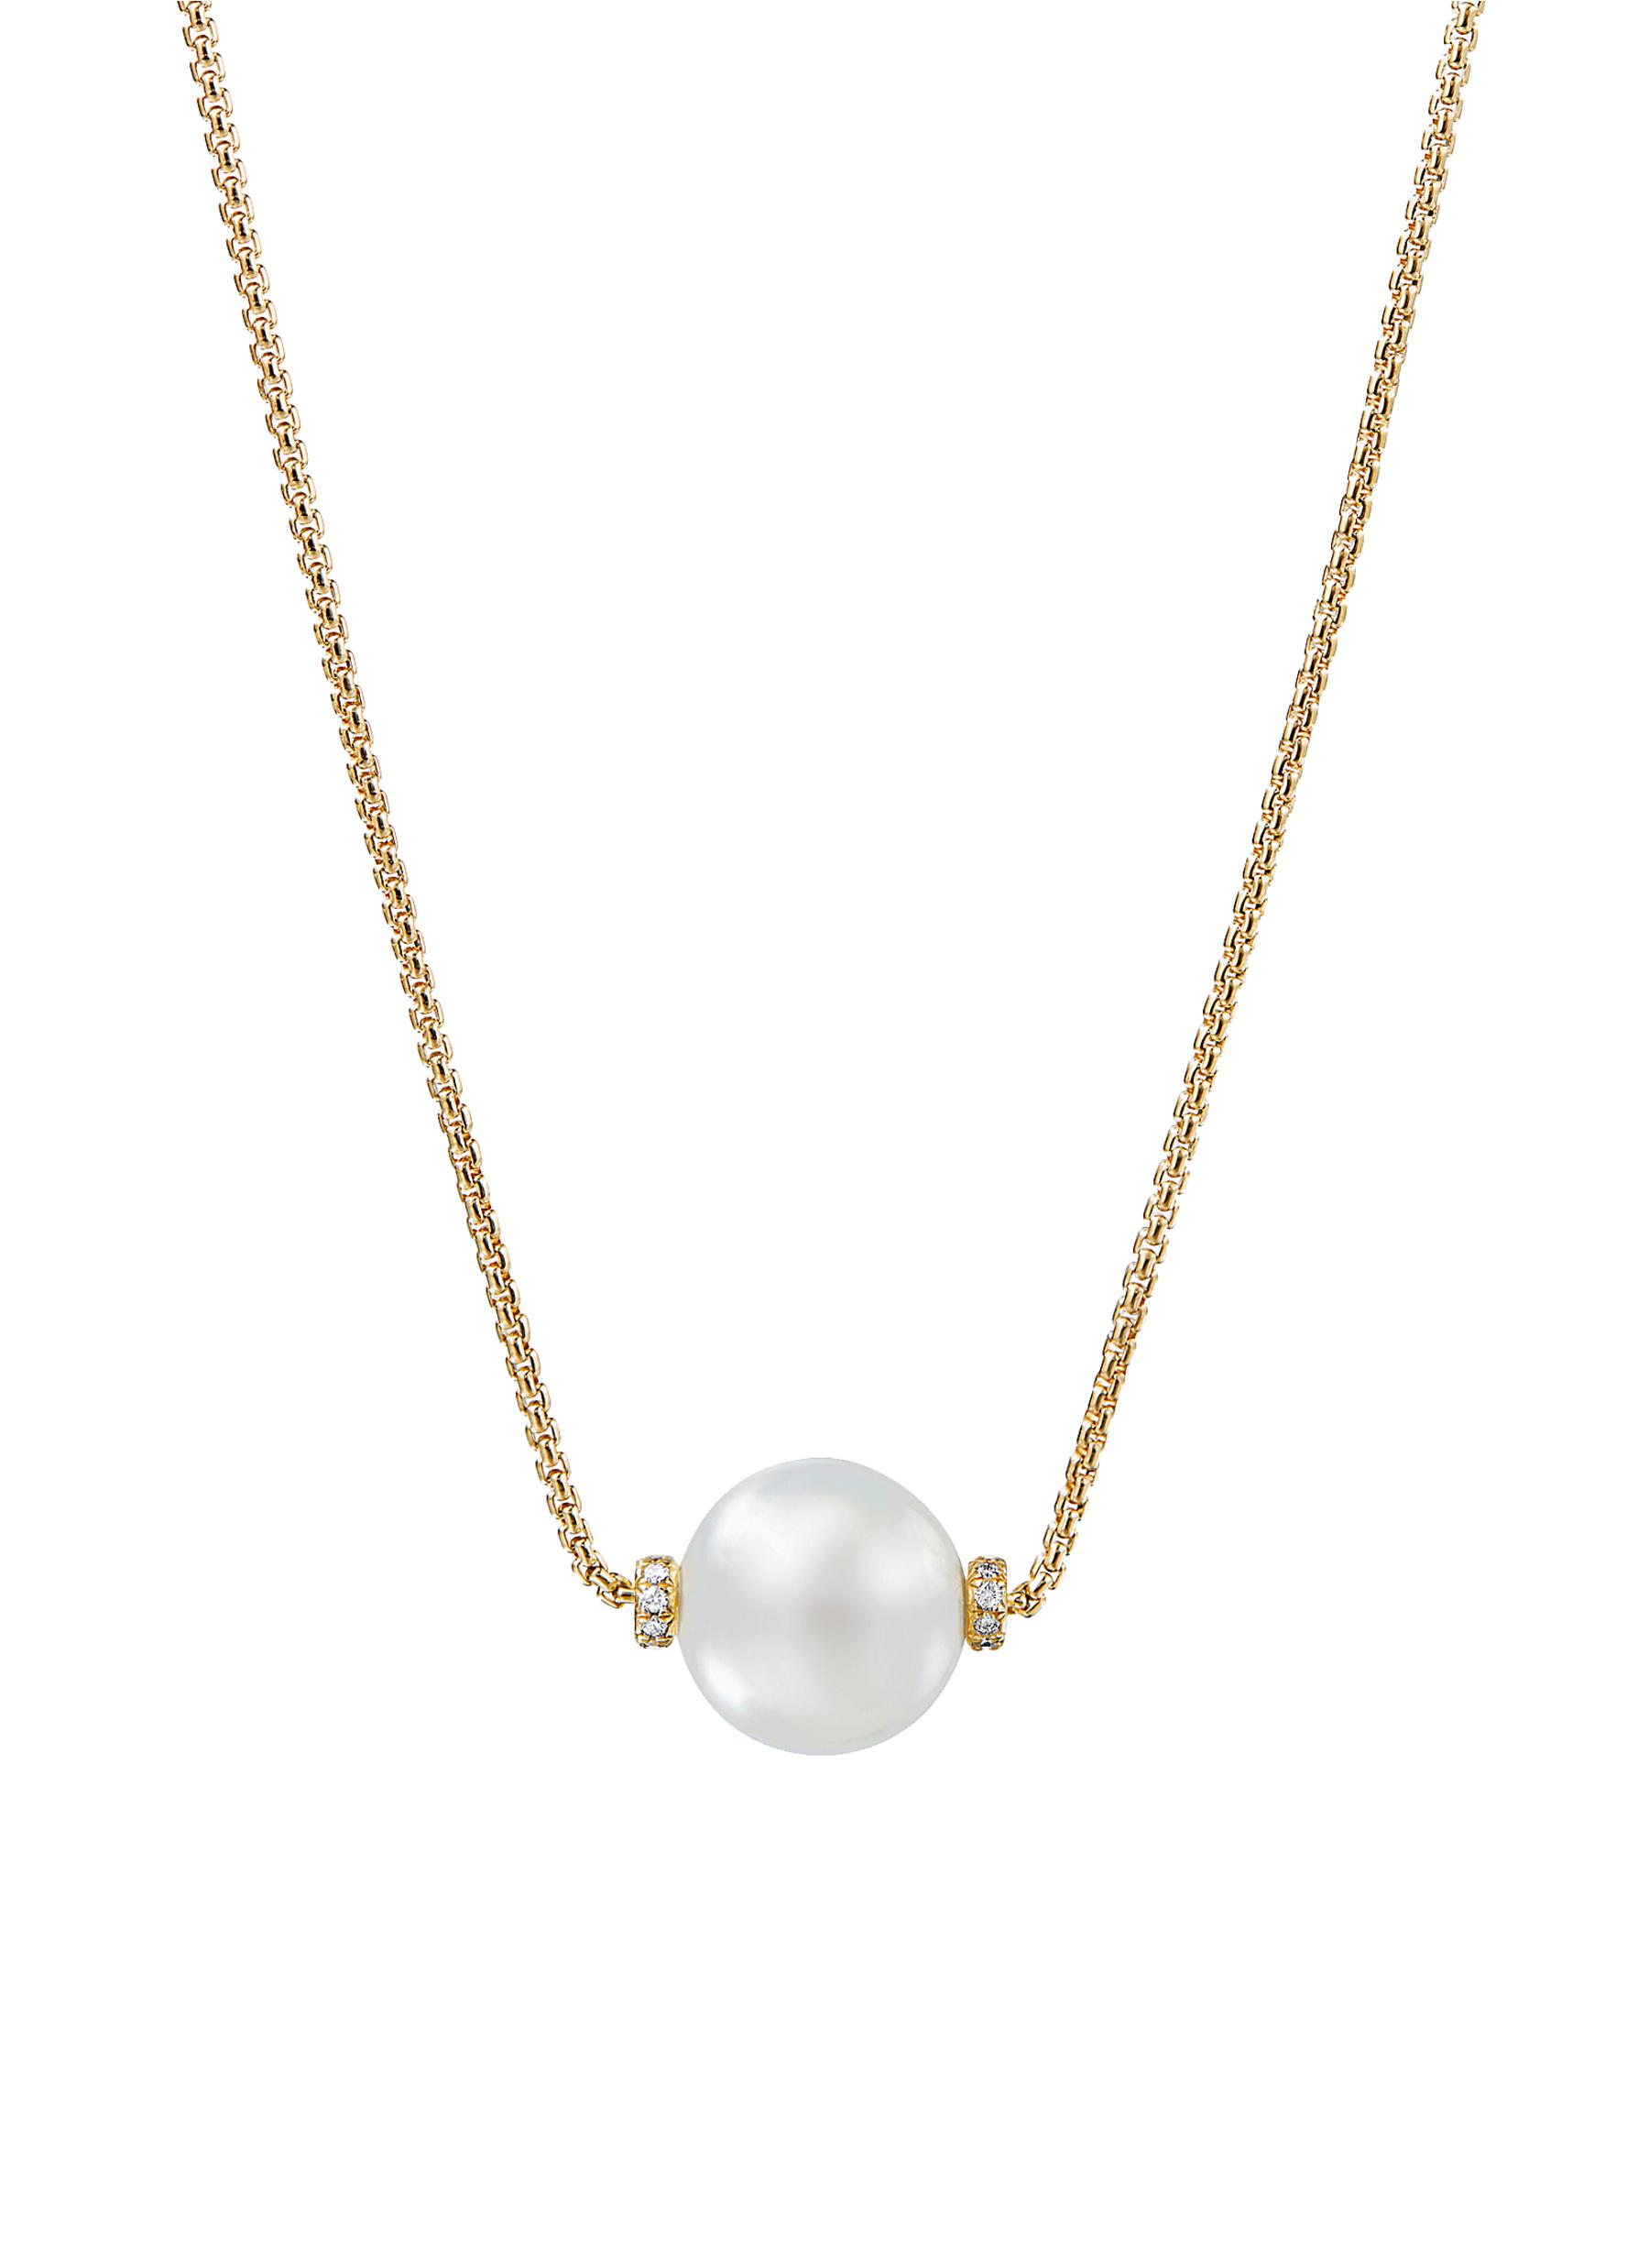 DAVID YURMAN Solari' diamond South Sea pearl pendant necklace